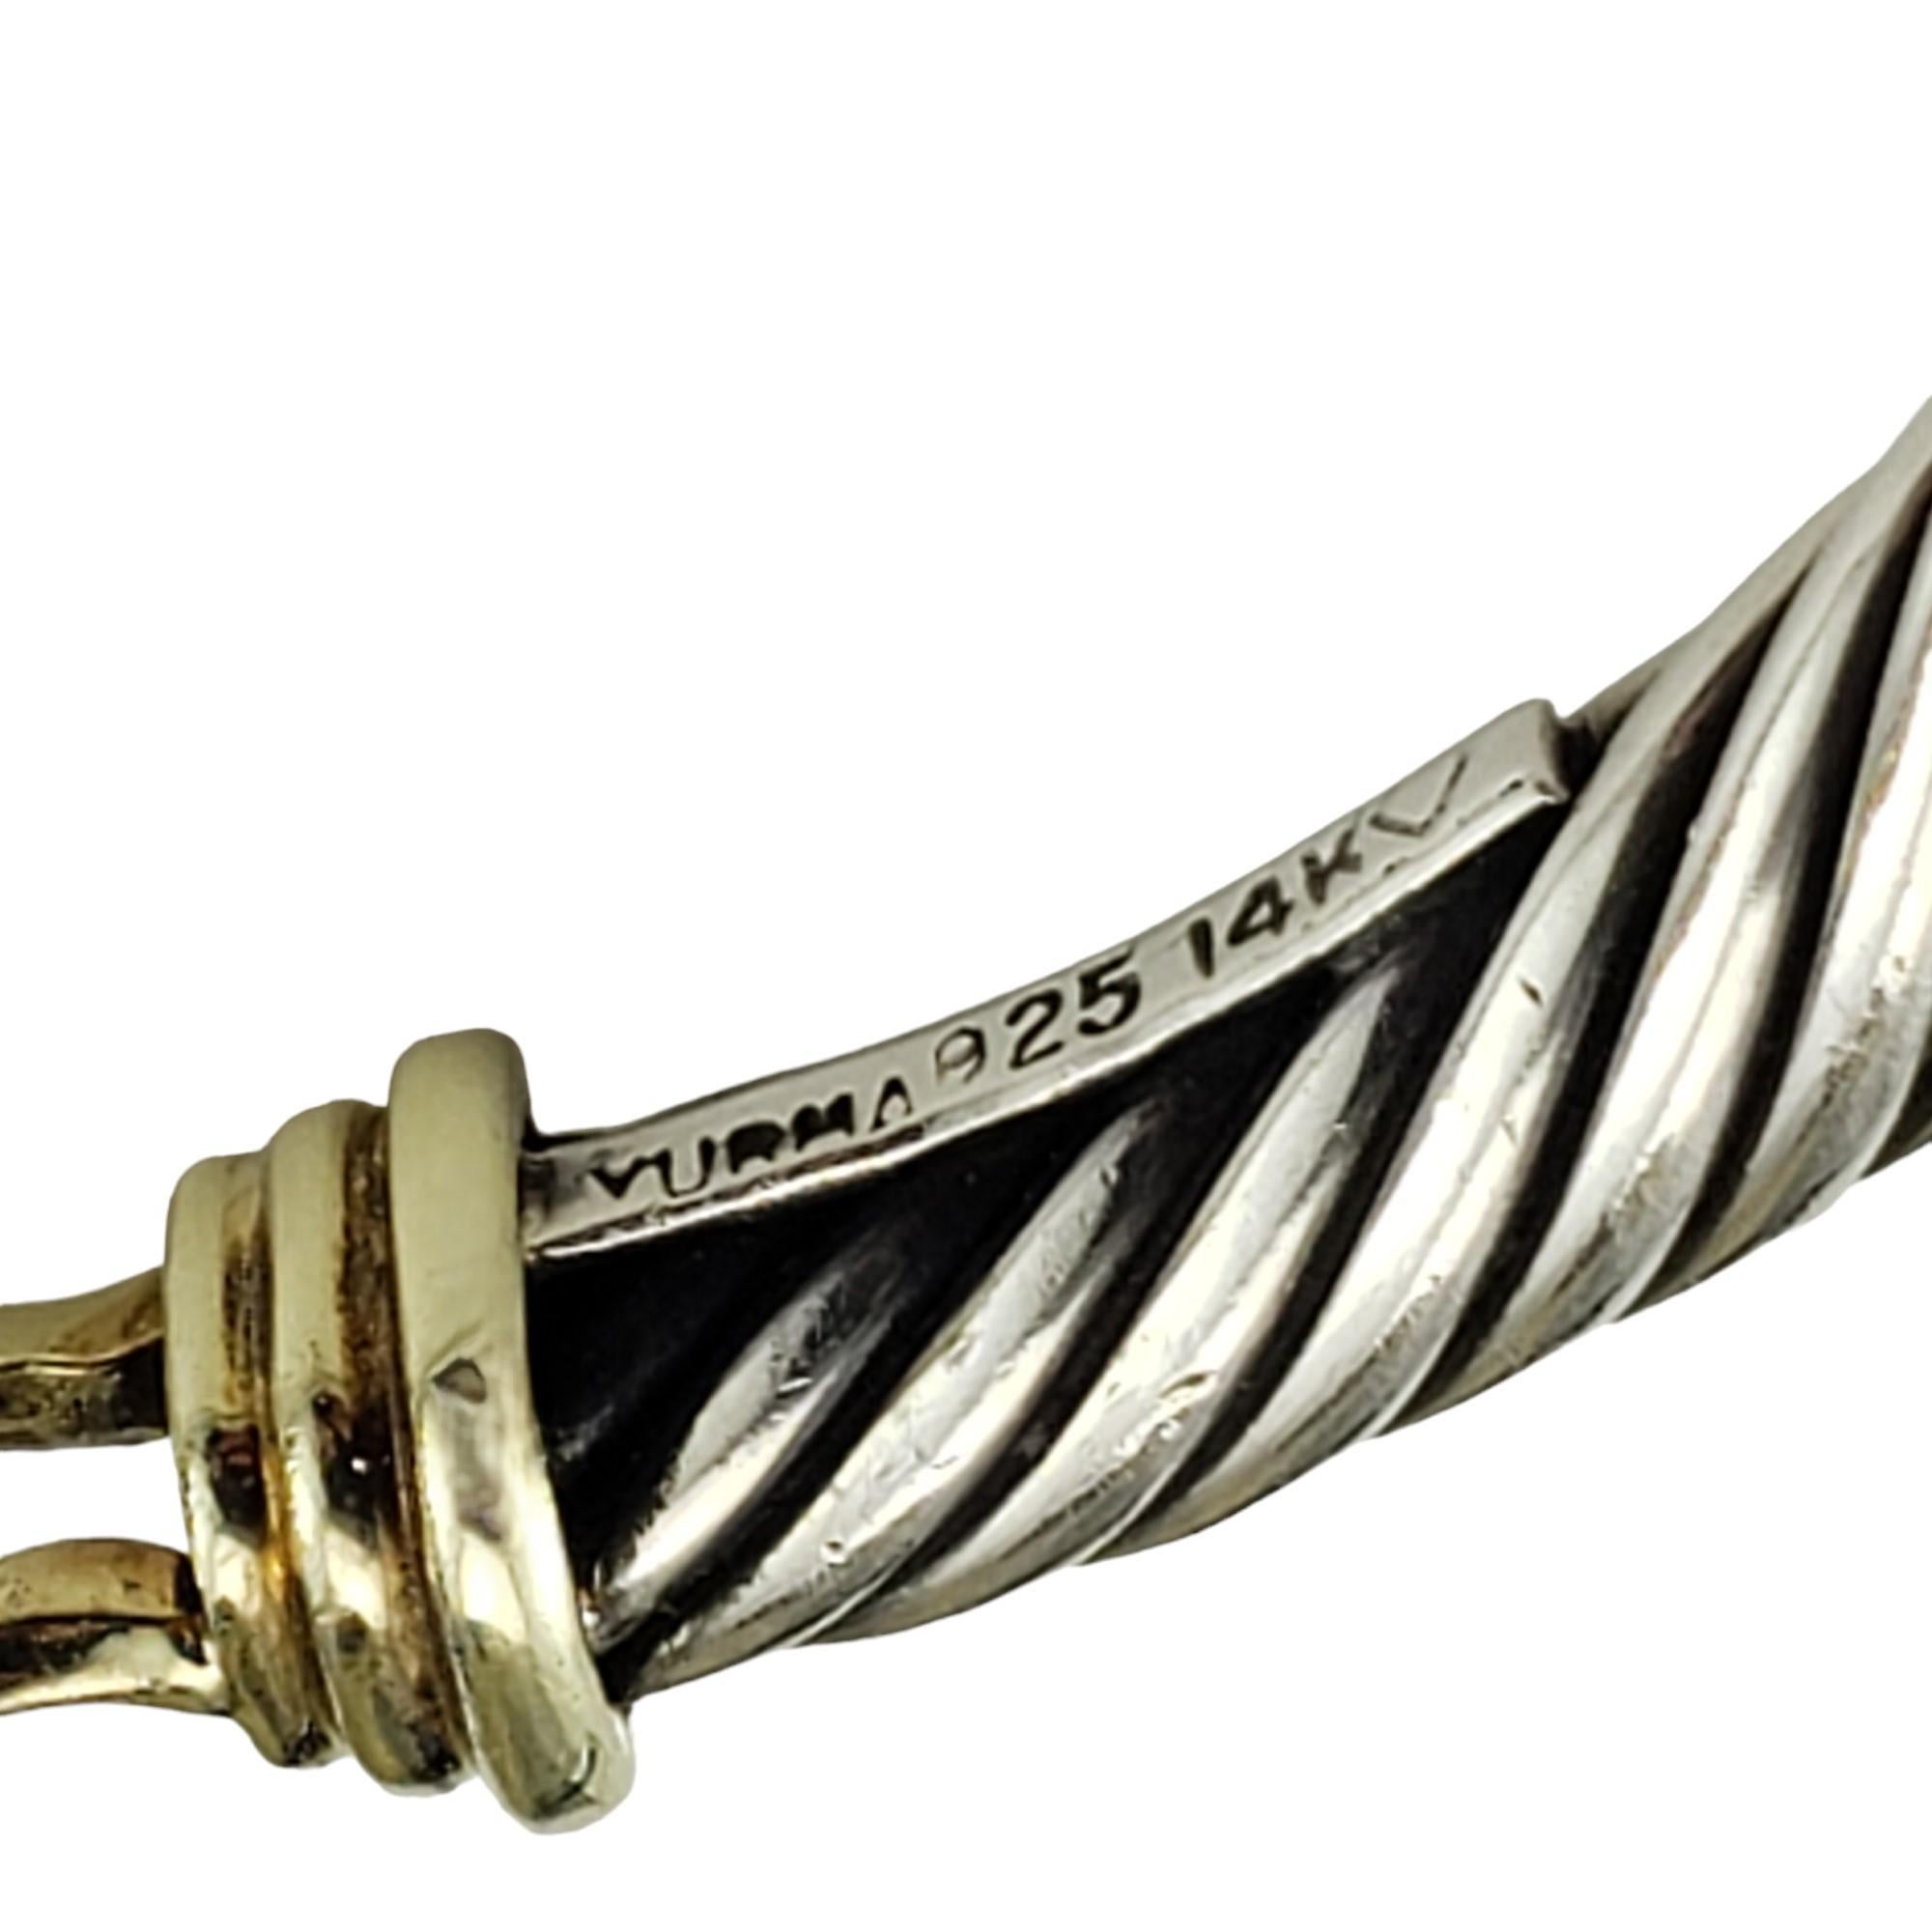 David Yurman Sterling Silber & 14K Gelbgold Schnalle-Armband #17083 1